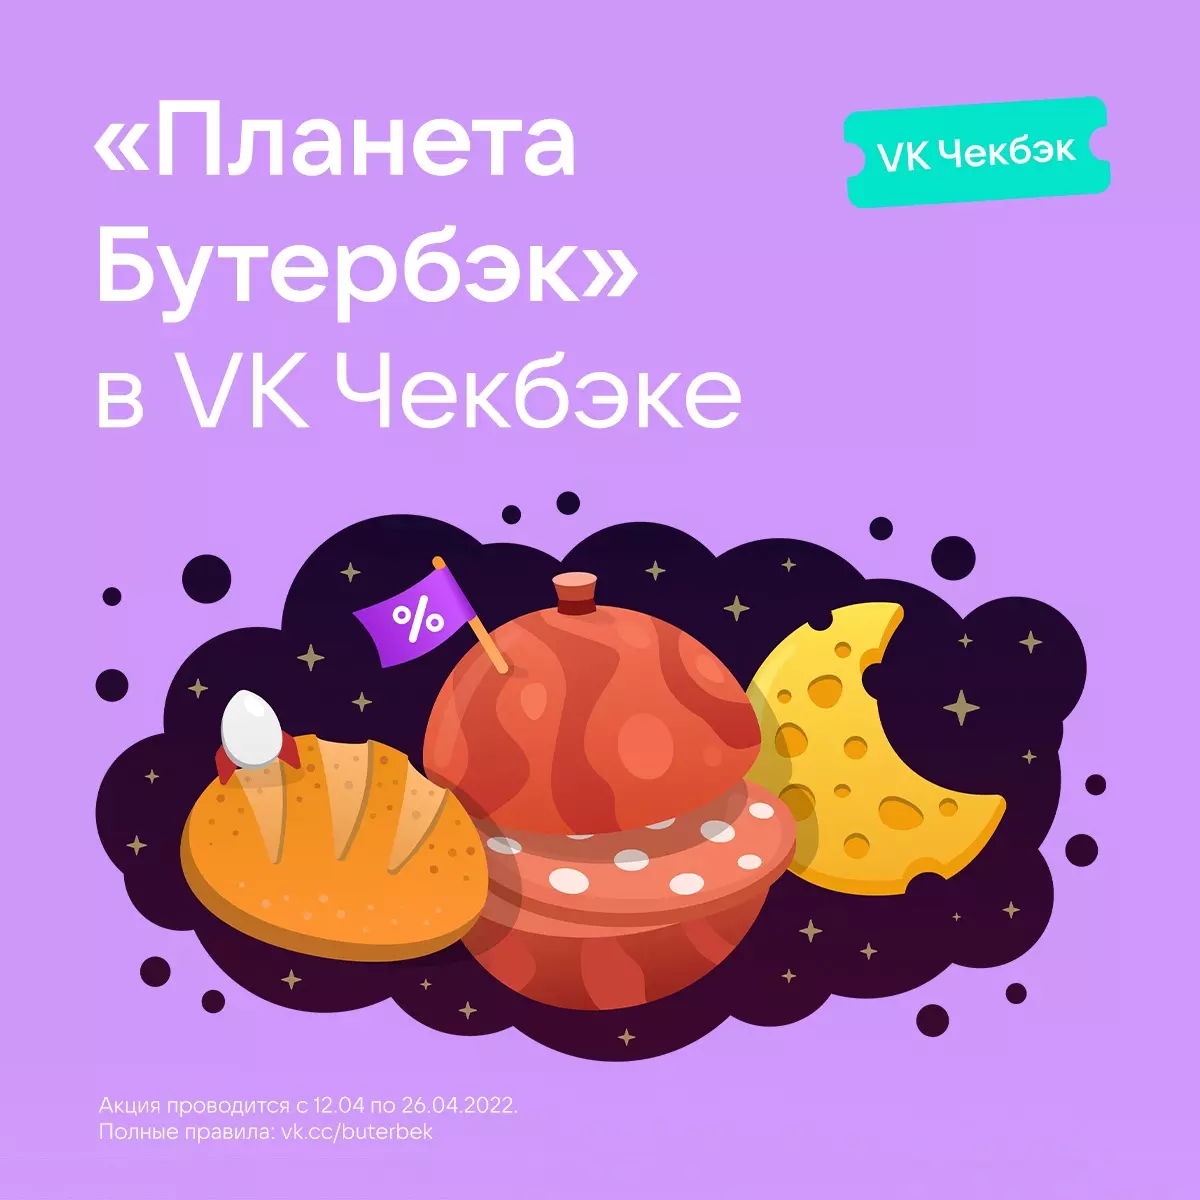 Акция Вконтакте: «Планета Бутербэк»